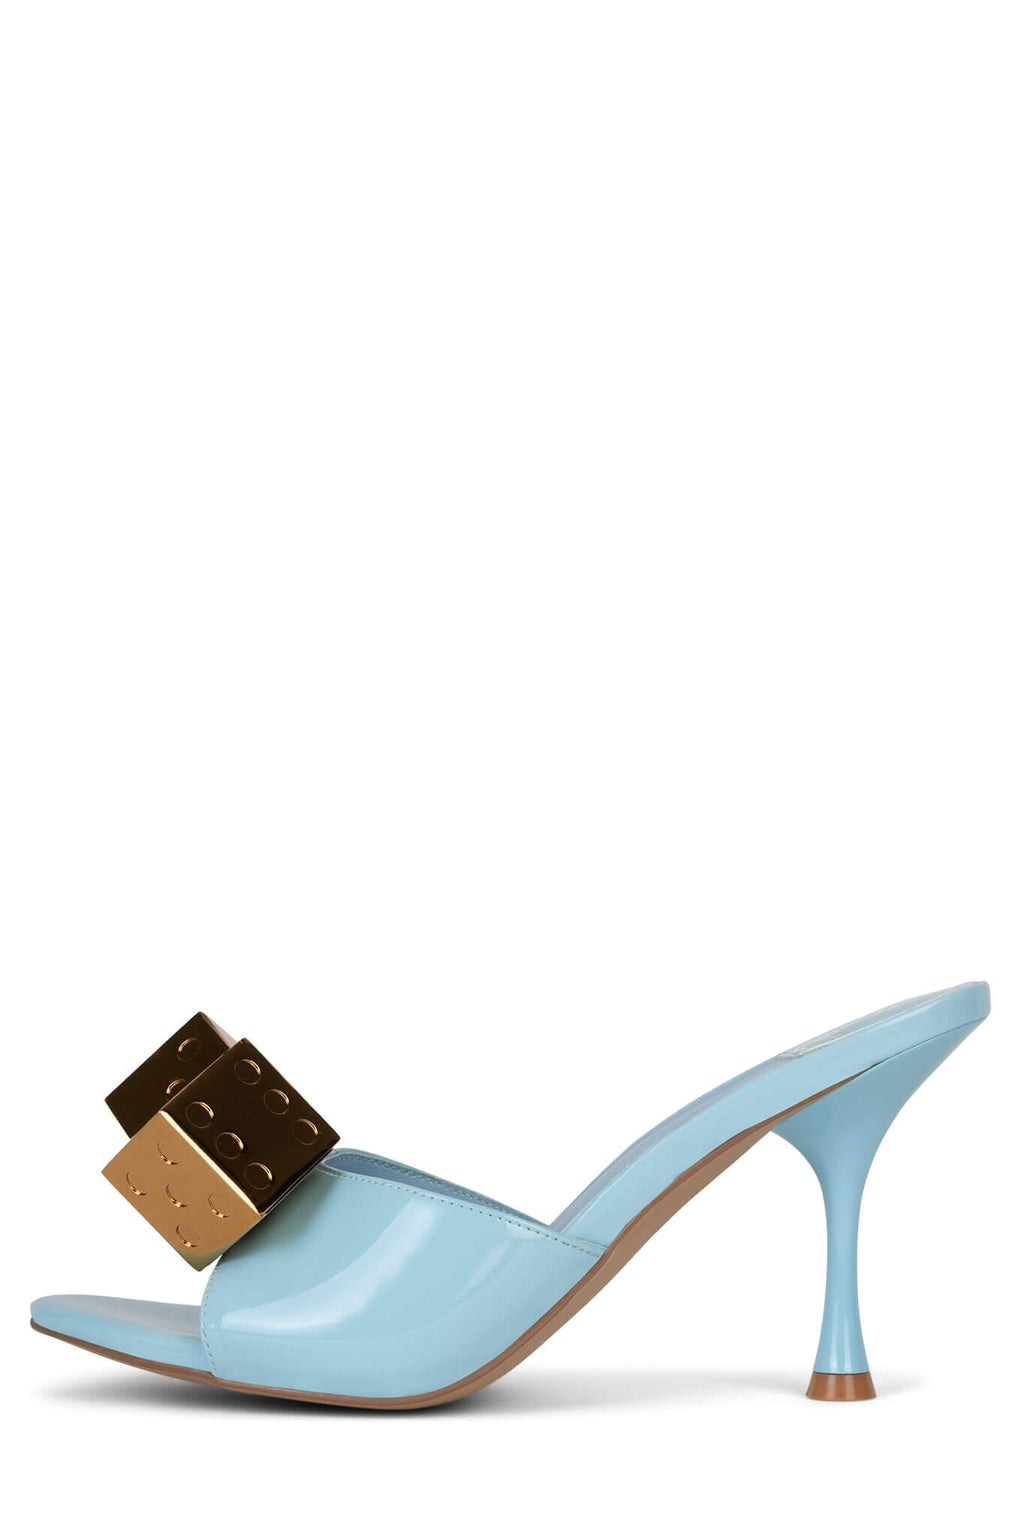 dice heeled sandal dv blue patent gold 6